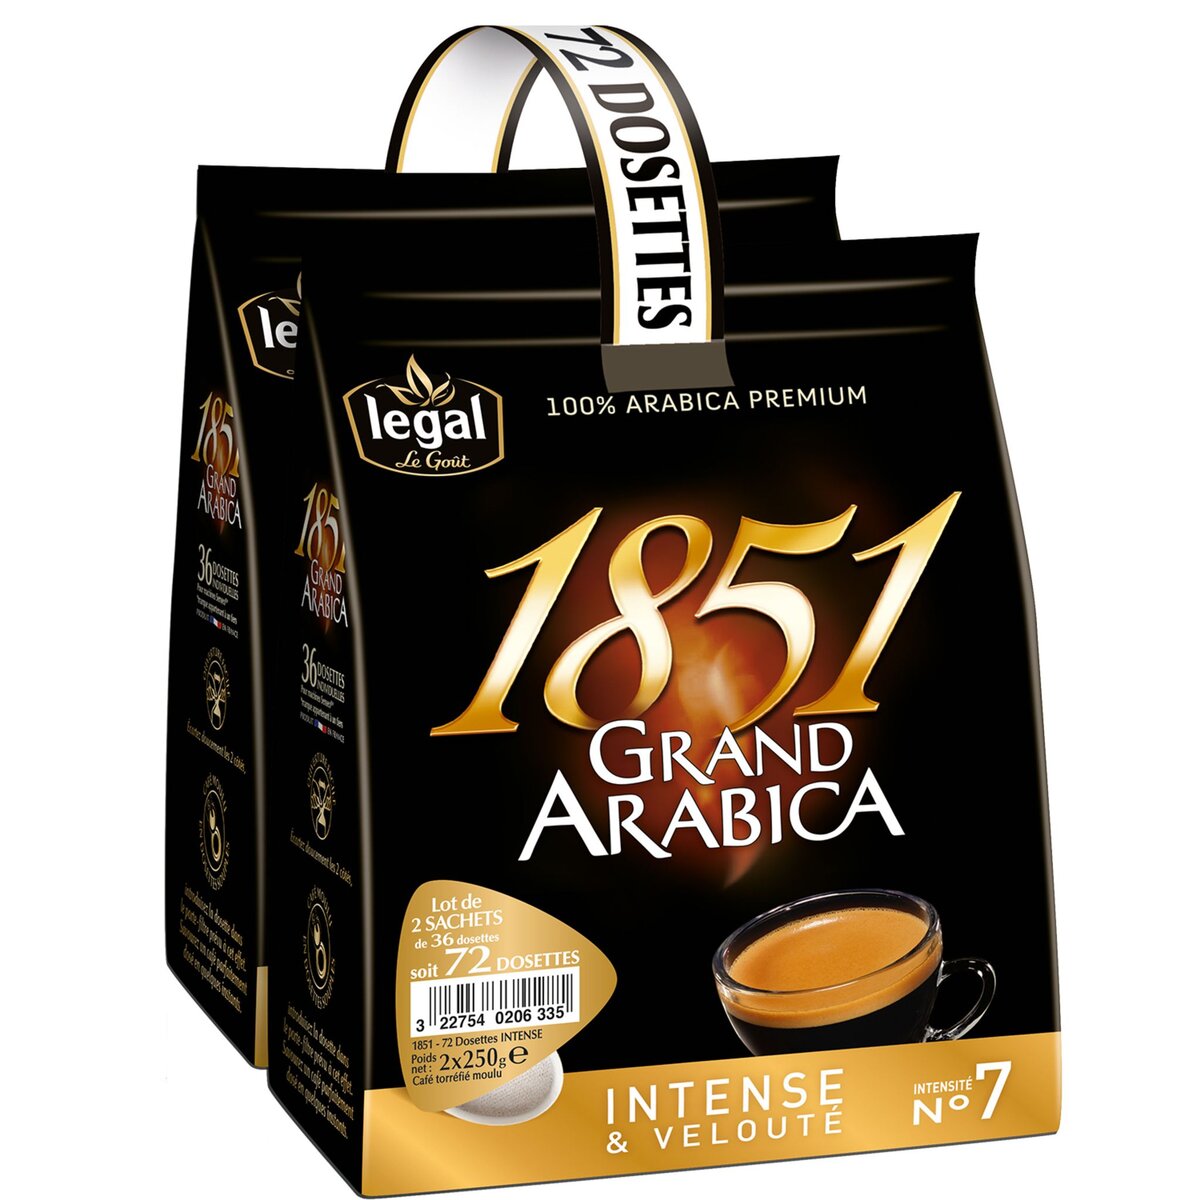 LEGAL Legal grand arabica intense dosettes x72 -500g